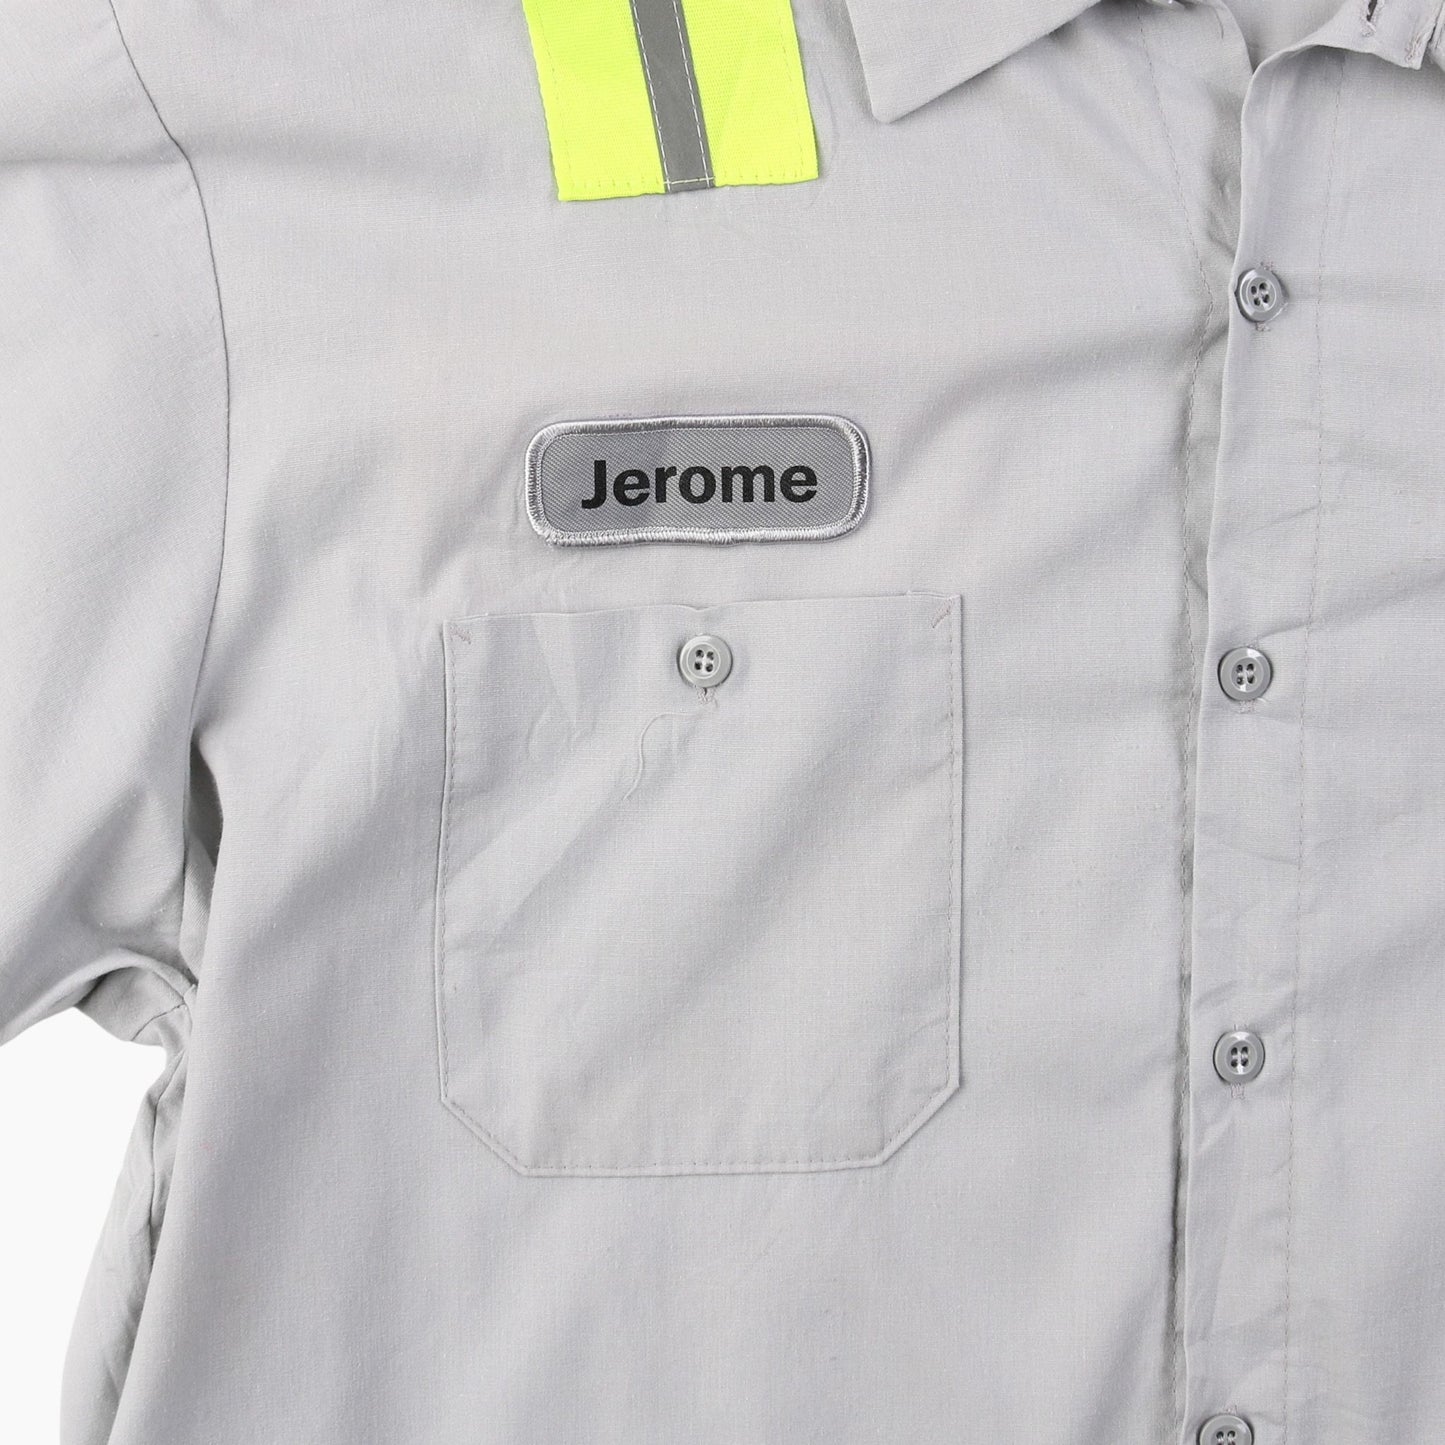 'Jerome' Garage Work Shirt - American Madness